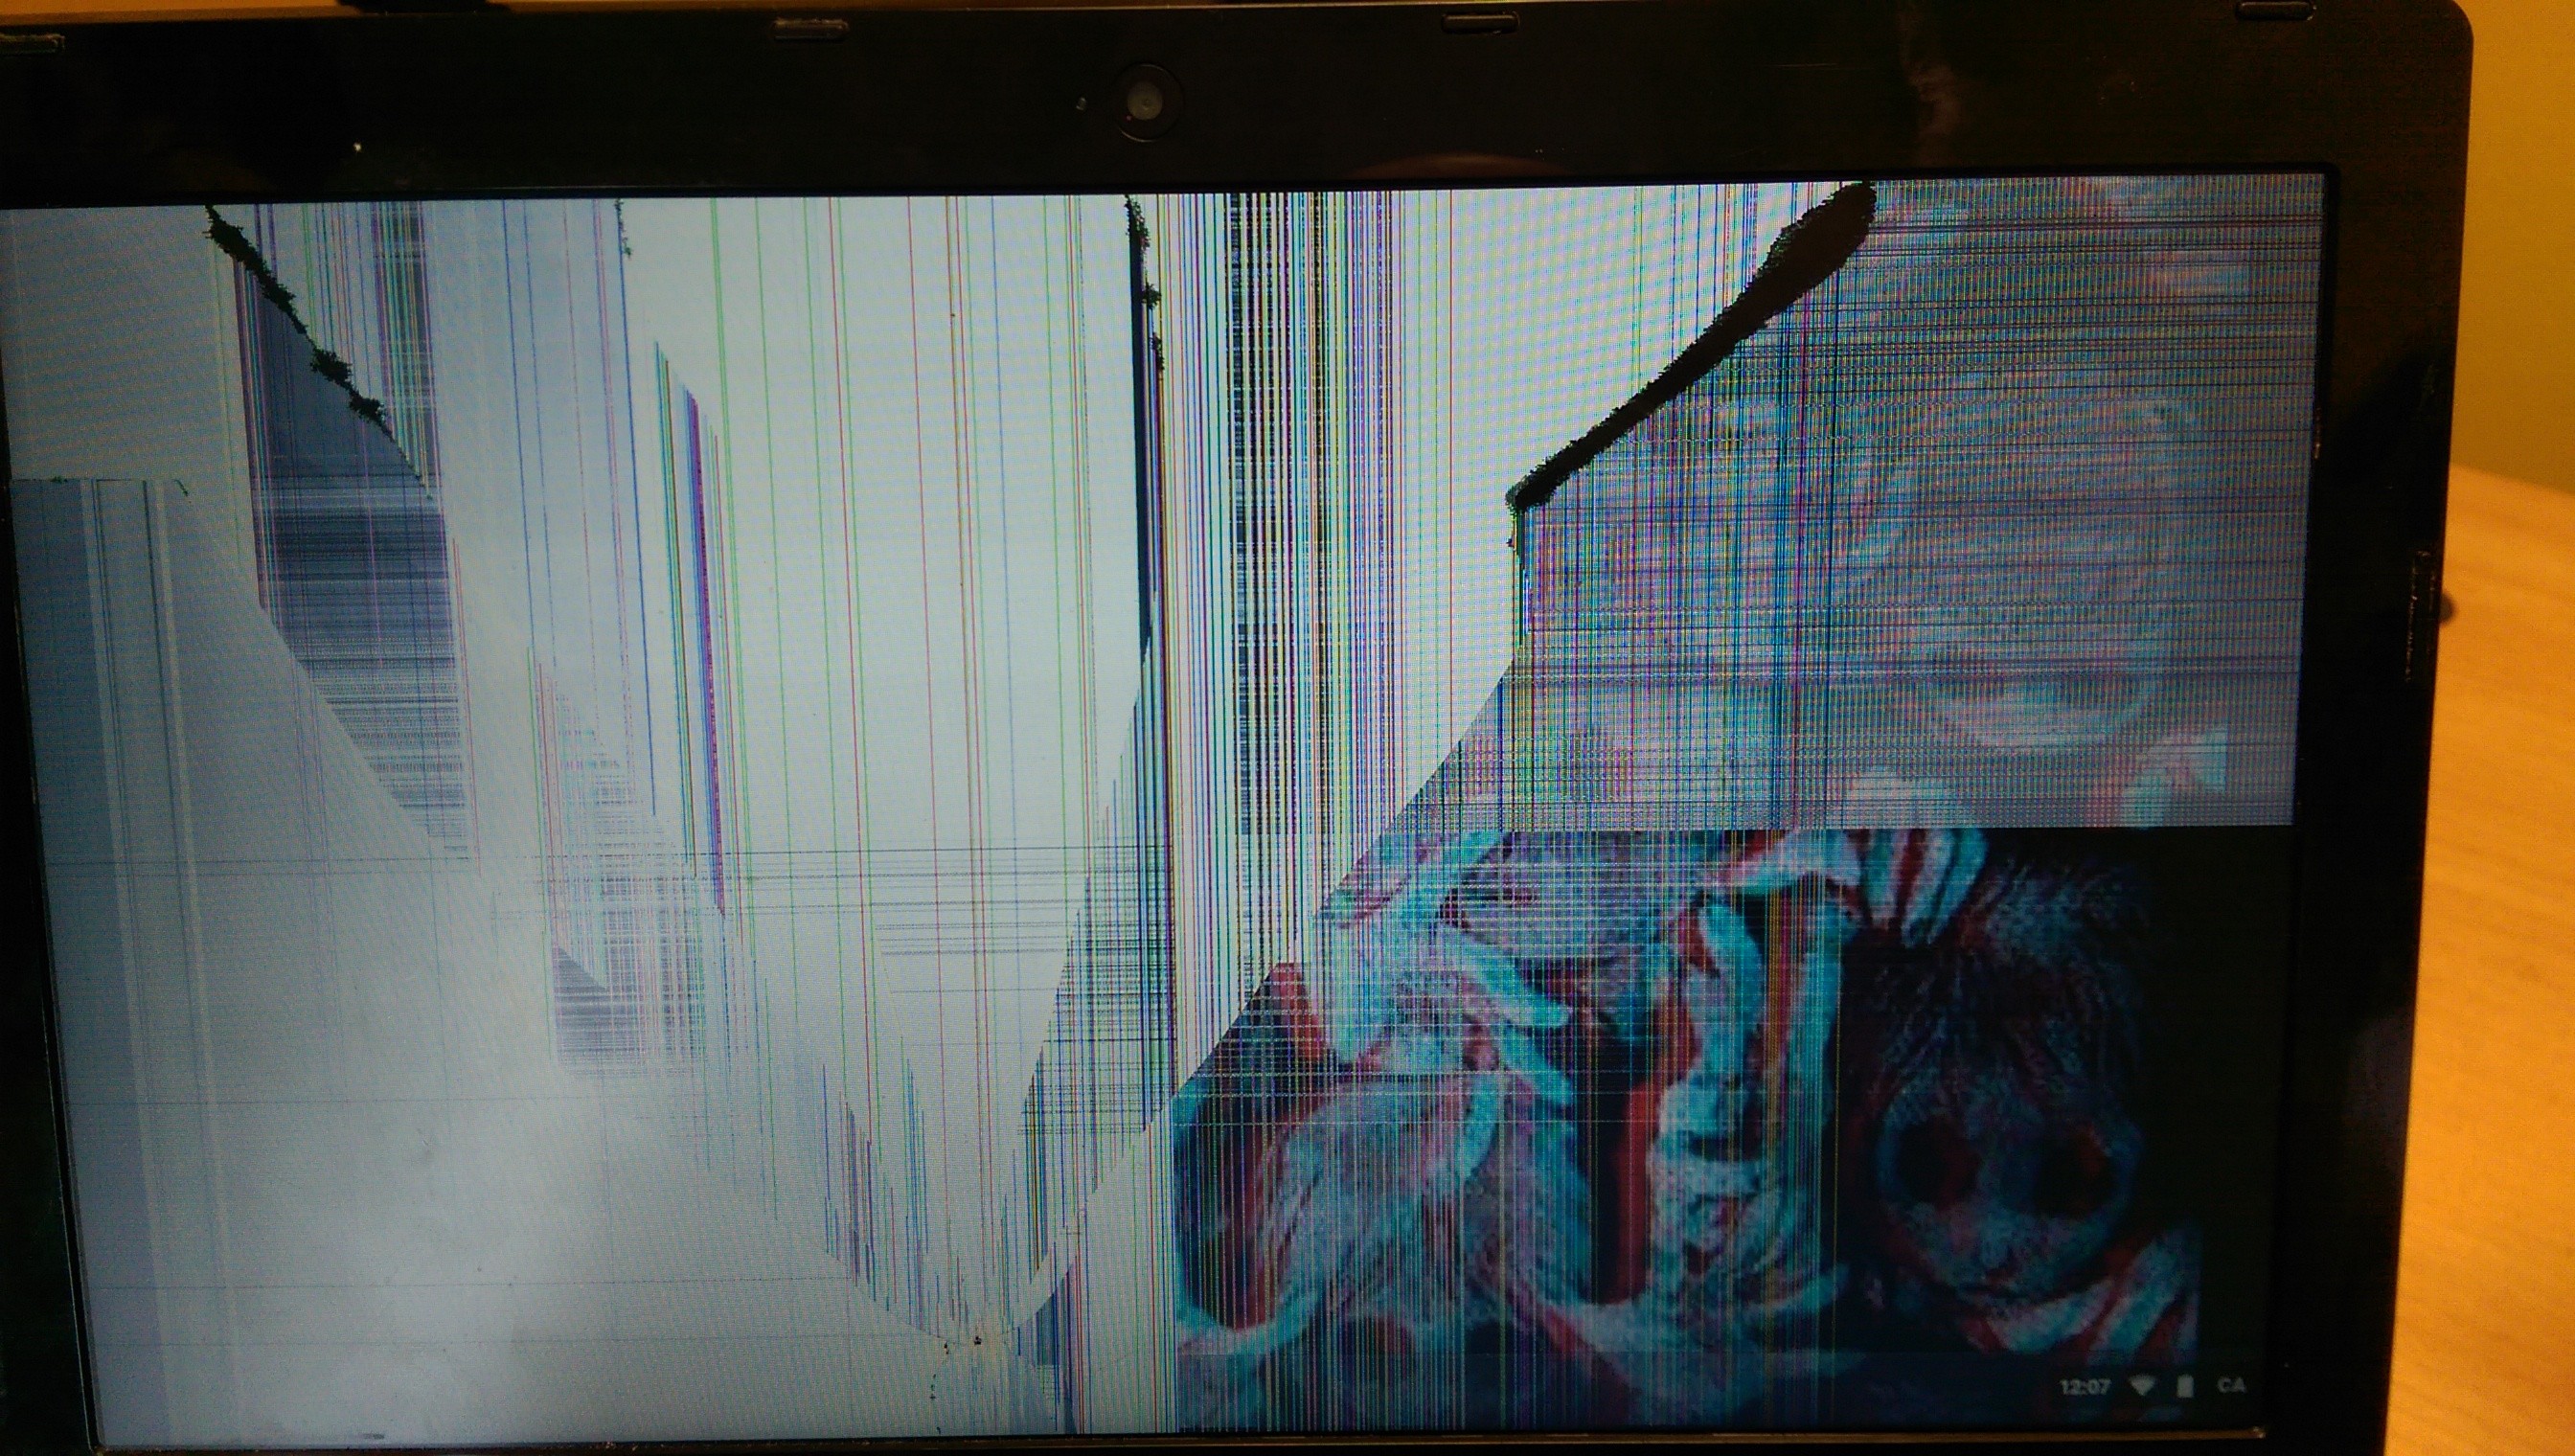 2688x1520 Chromebook with broken screen